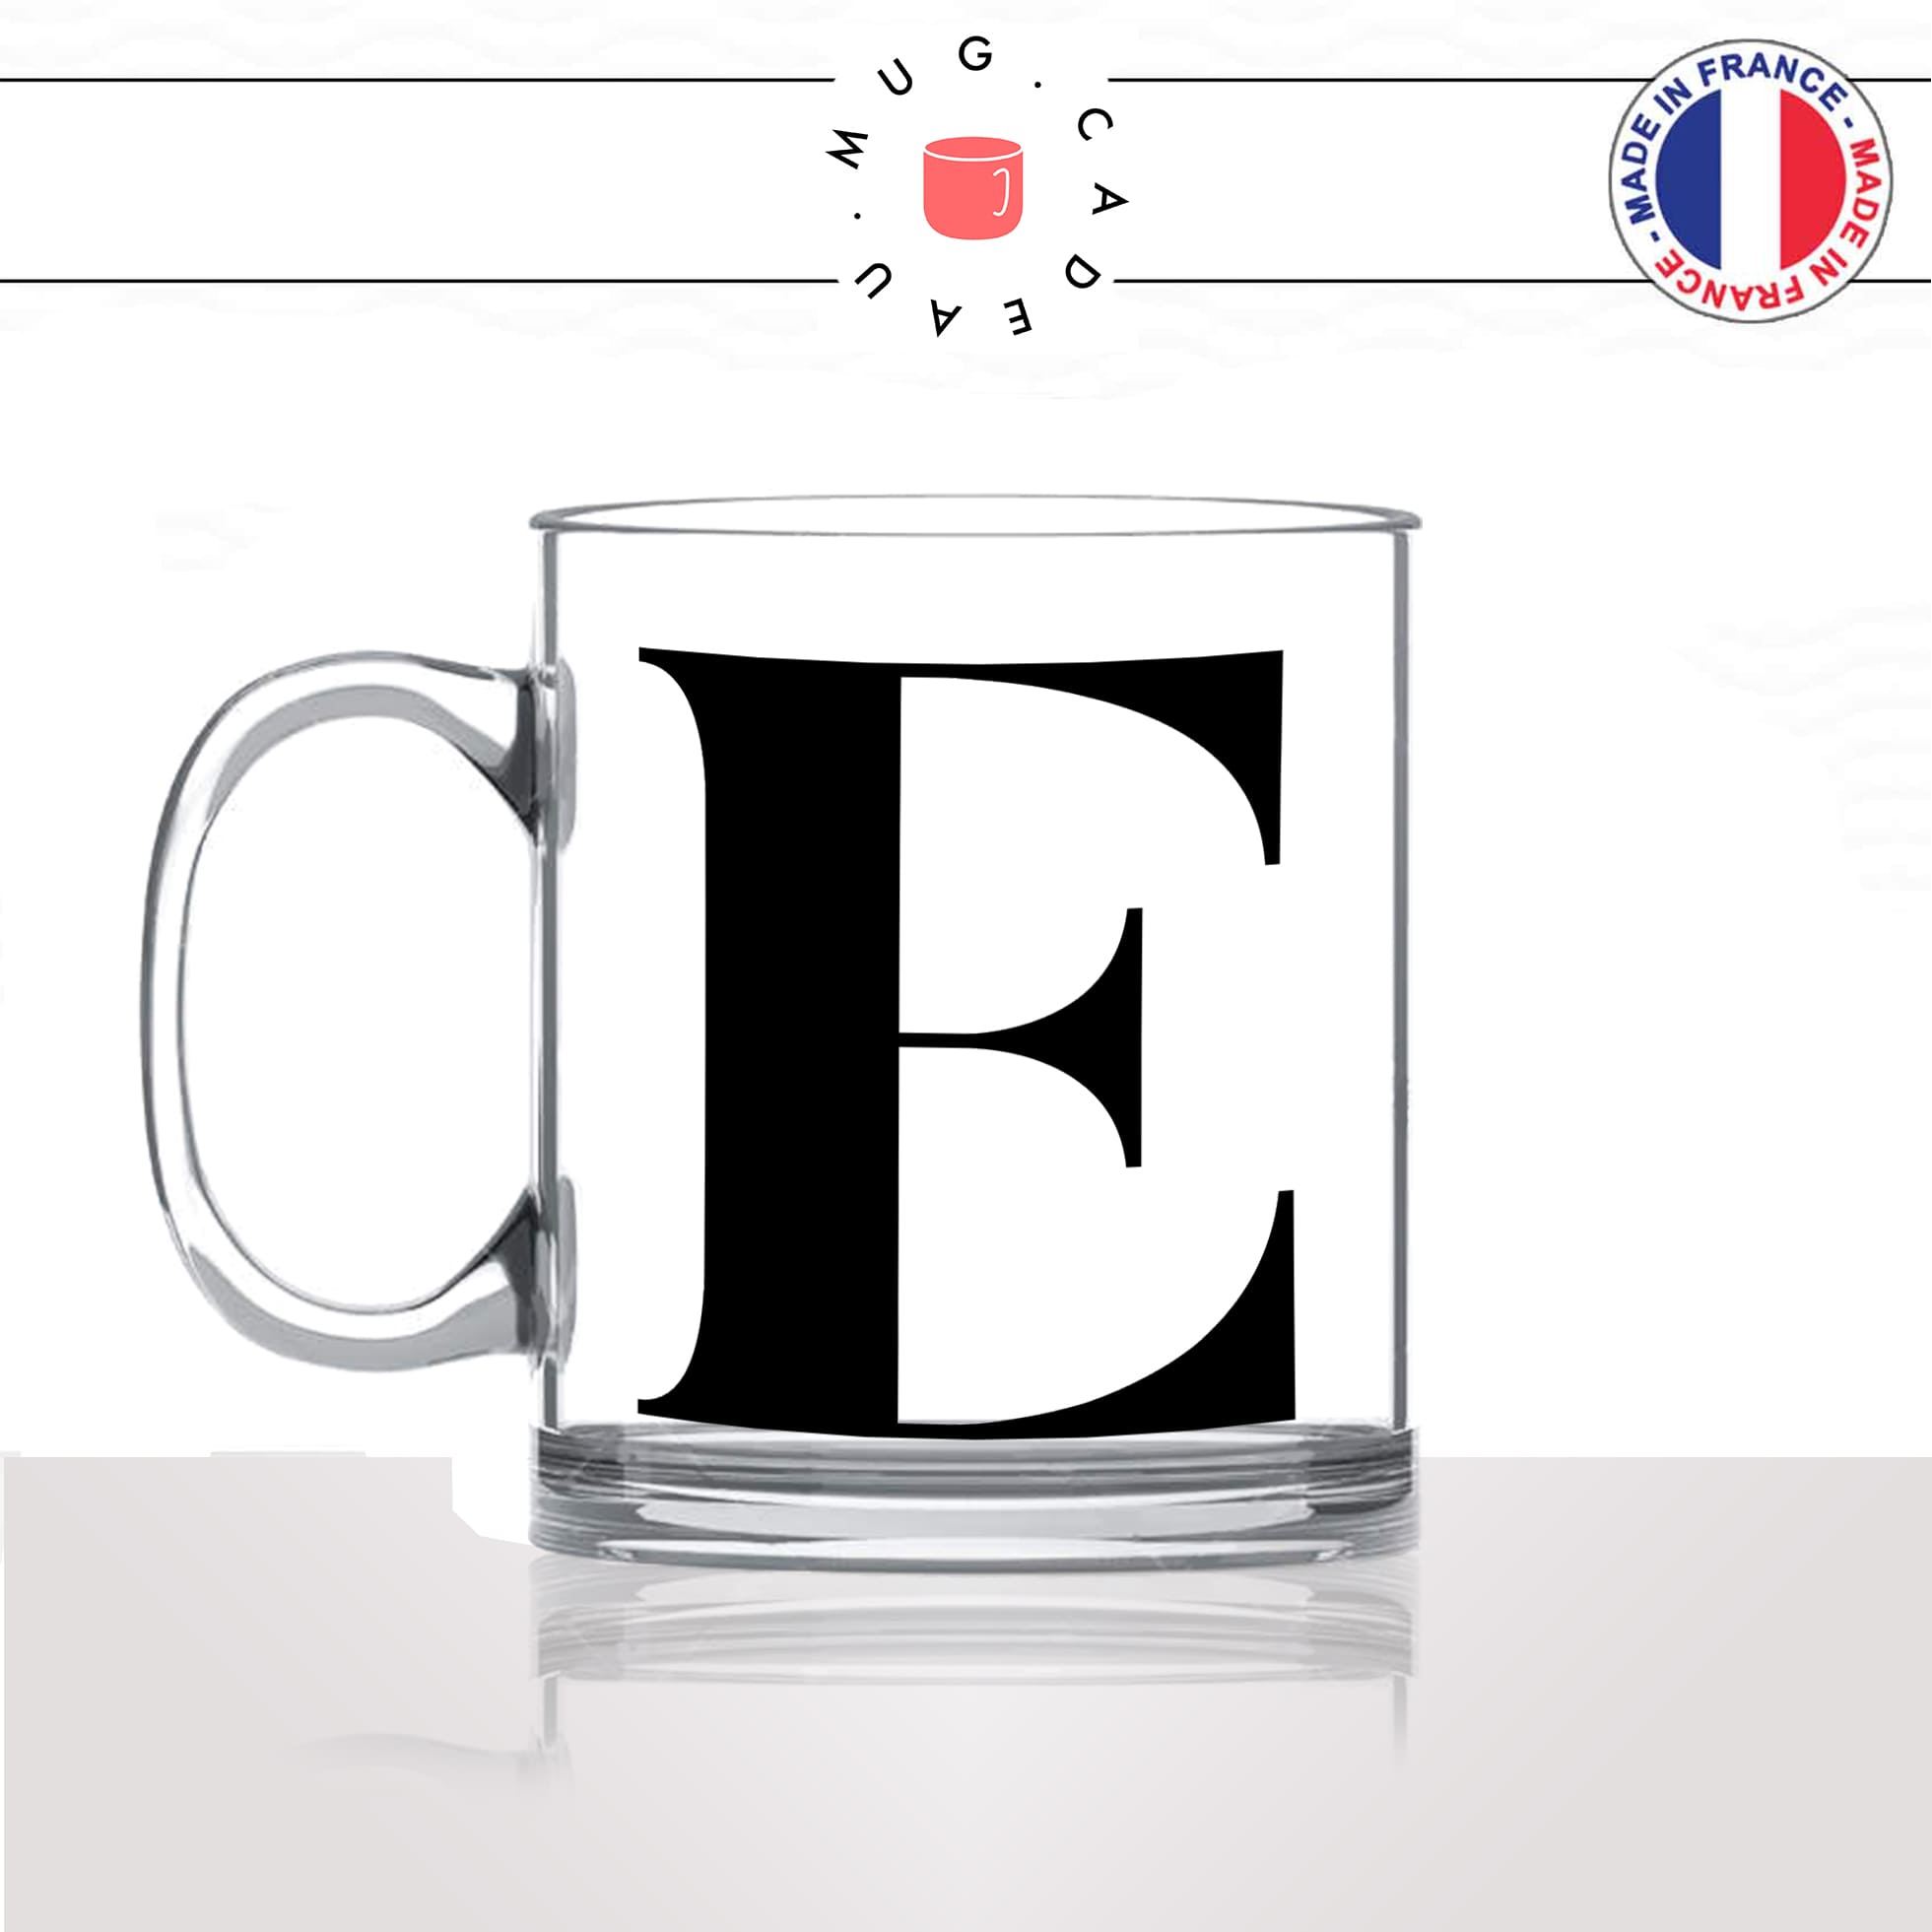 mug-tasse-en-verre-transparent-glass-initiale-E-Emanuelle-eric-erika-minuscule-majuscule-lettre-collegue-original-idée-cadeau-fun-cool-café-thé